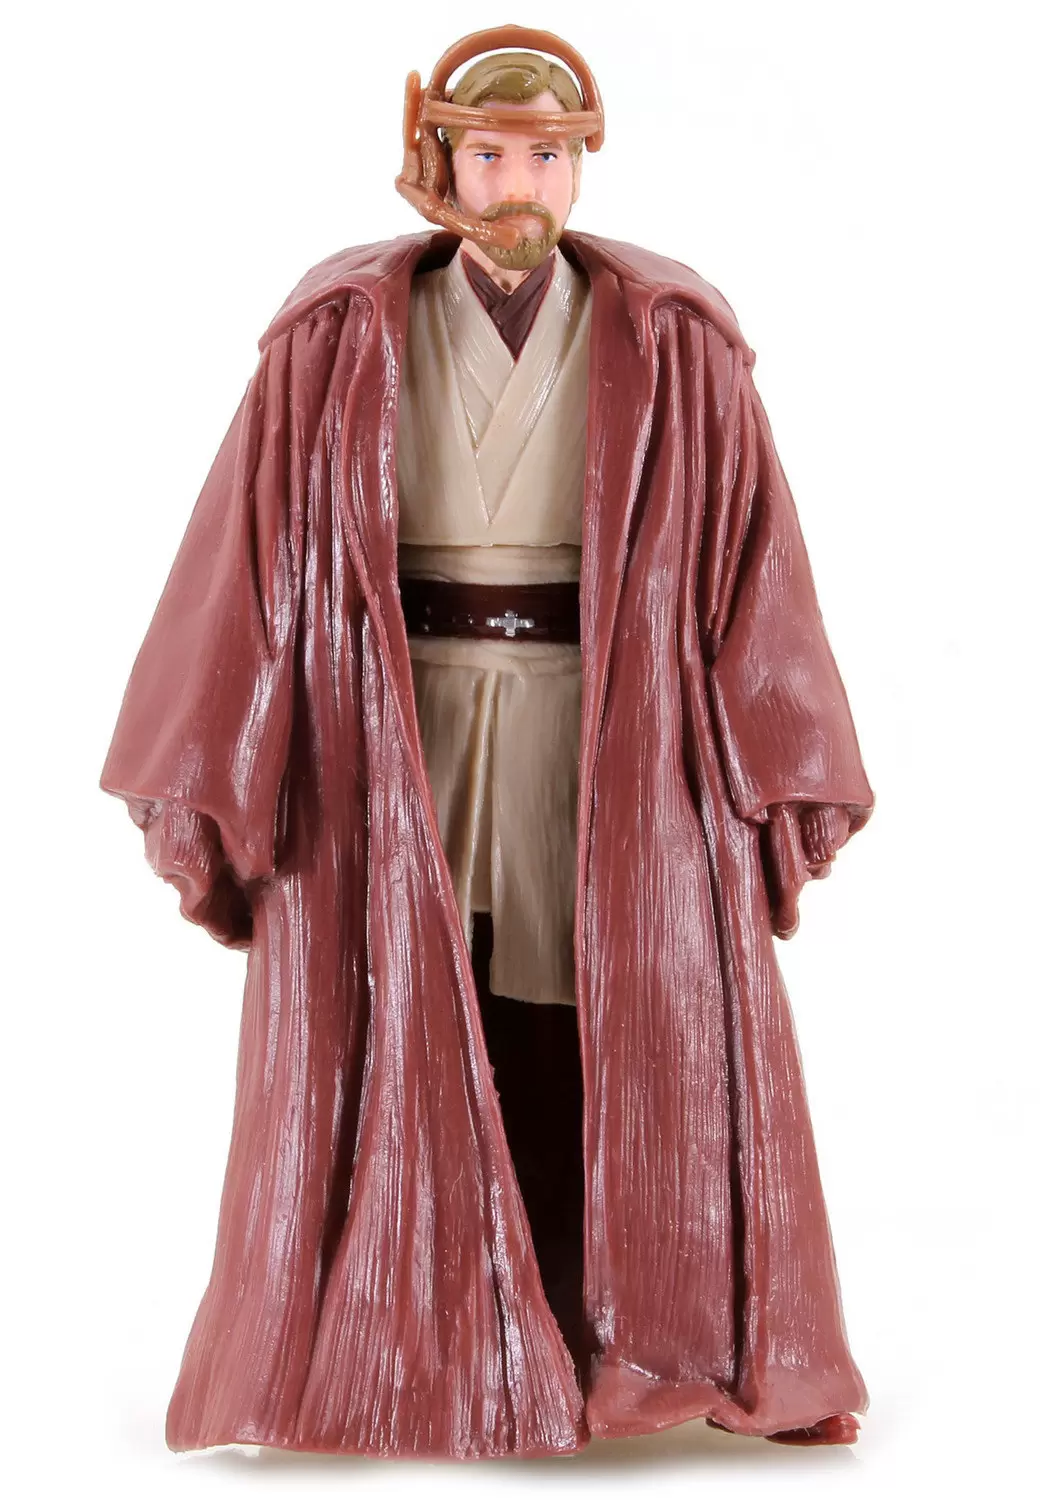 30th Anniversary Collection (TAC) - Obi-Wan Kenobi